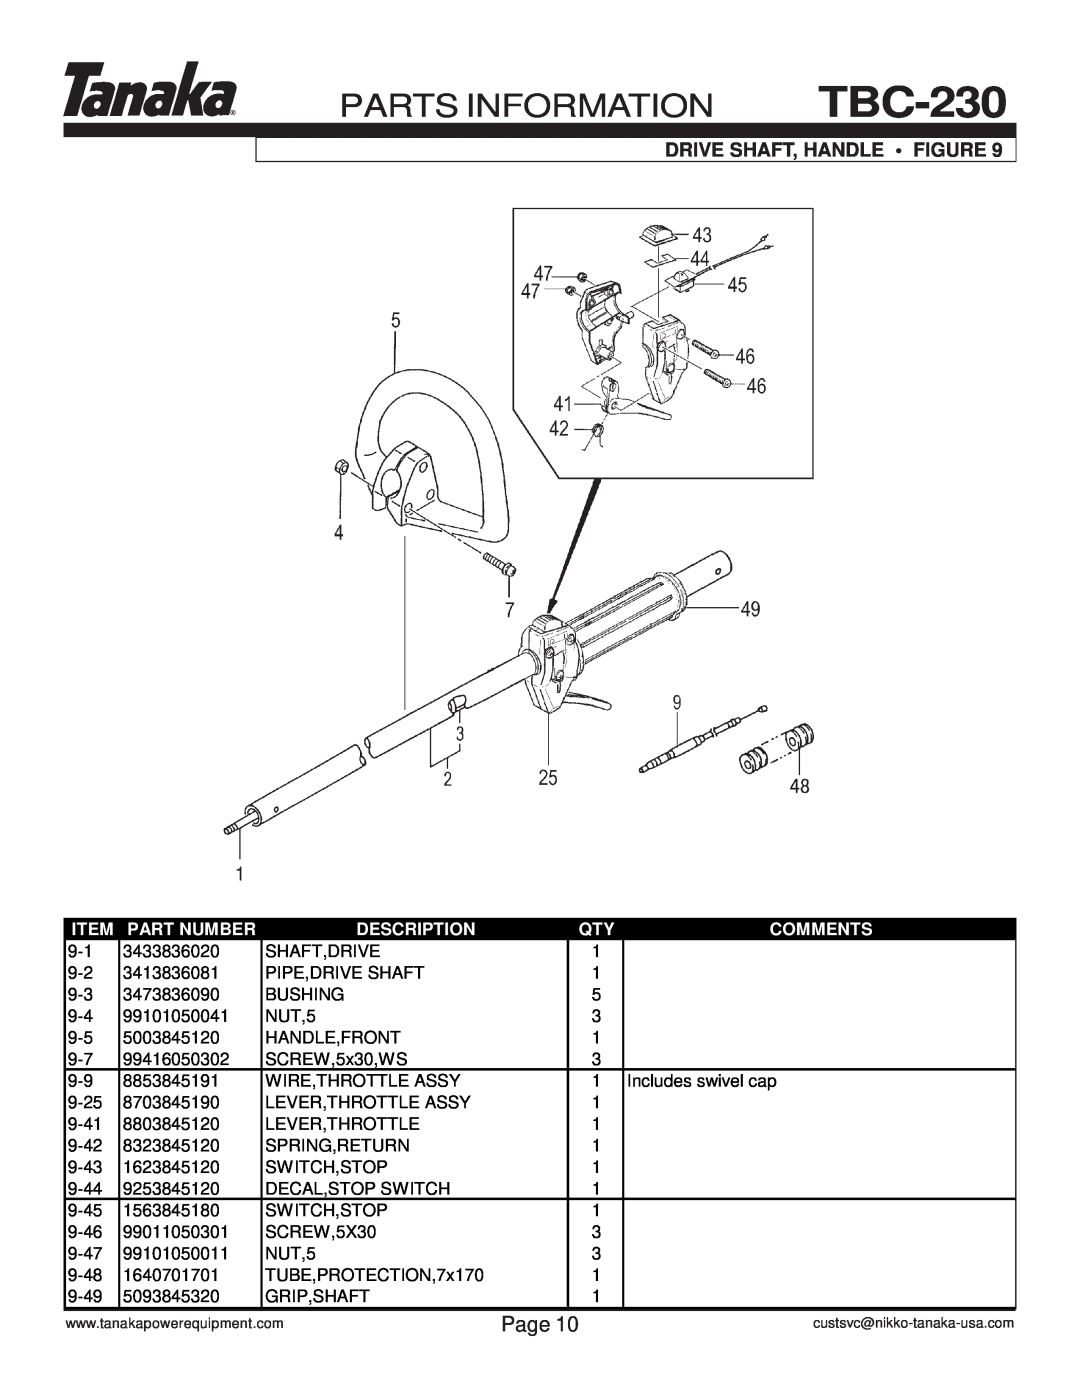 Tanaka TBC-230 manual Parts Information, Page, Drive Shaft, Handle Figure, Part Number, Description, Comments 